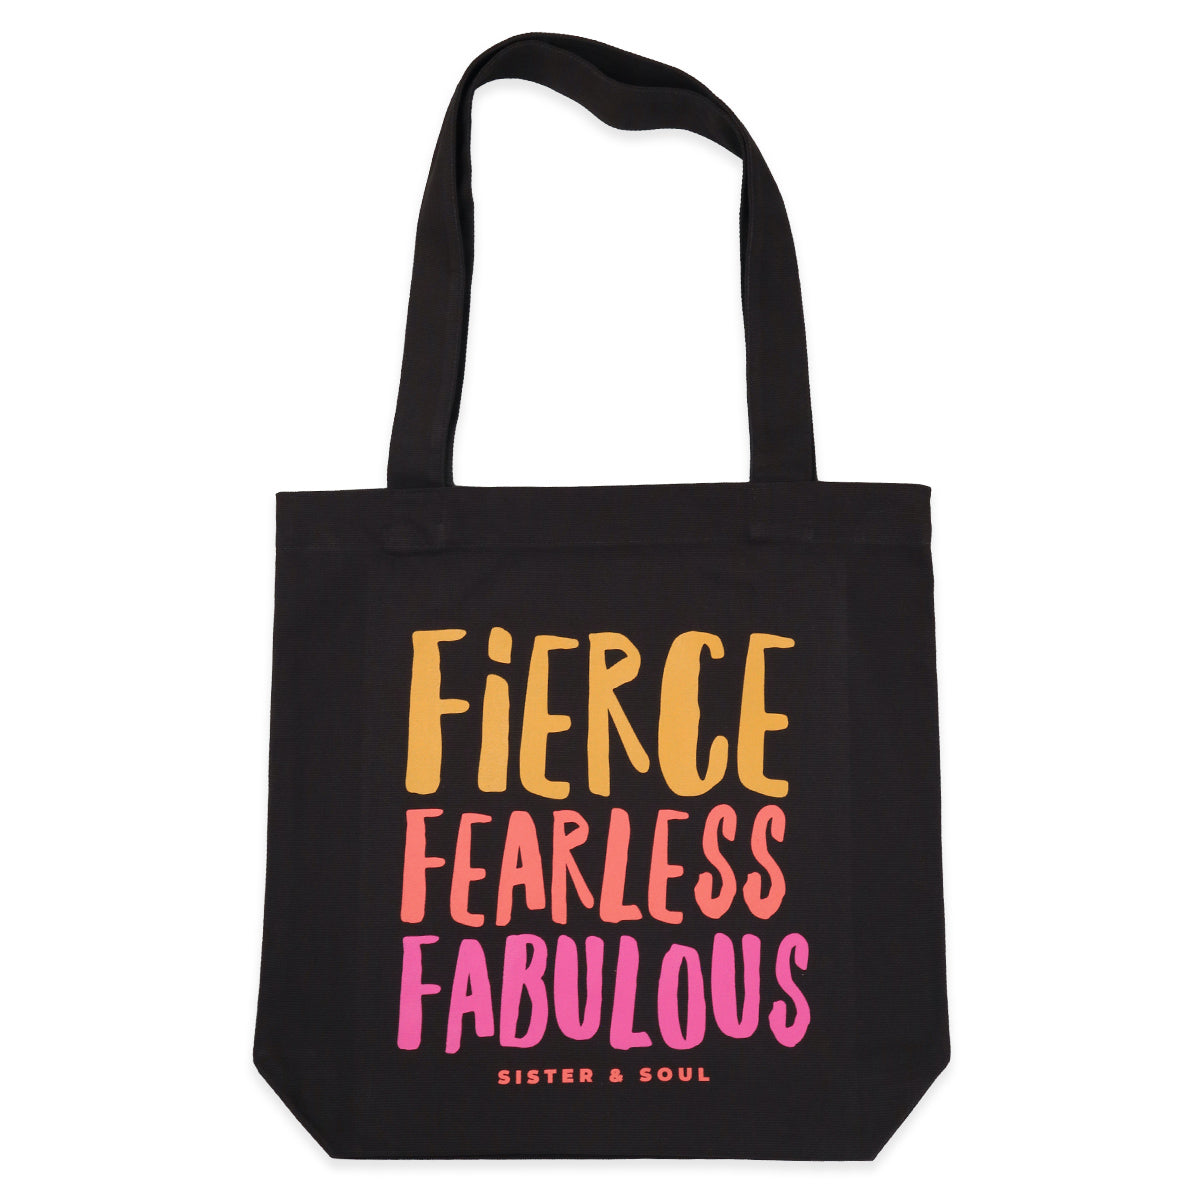 FIERCE FEARLESS FABULOUS - Canvas Tote Bag - Charcoal